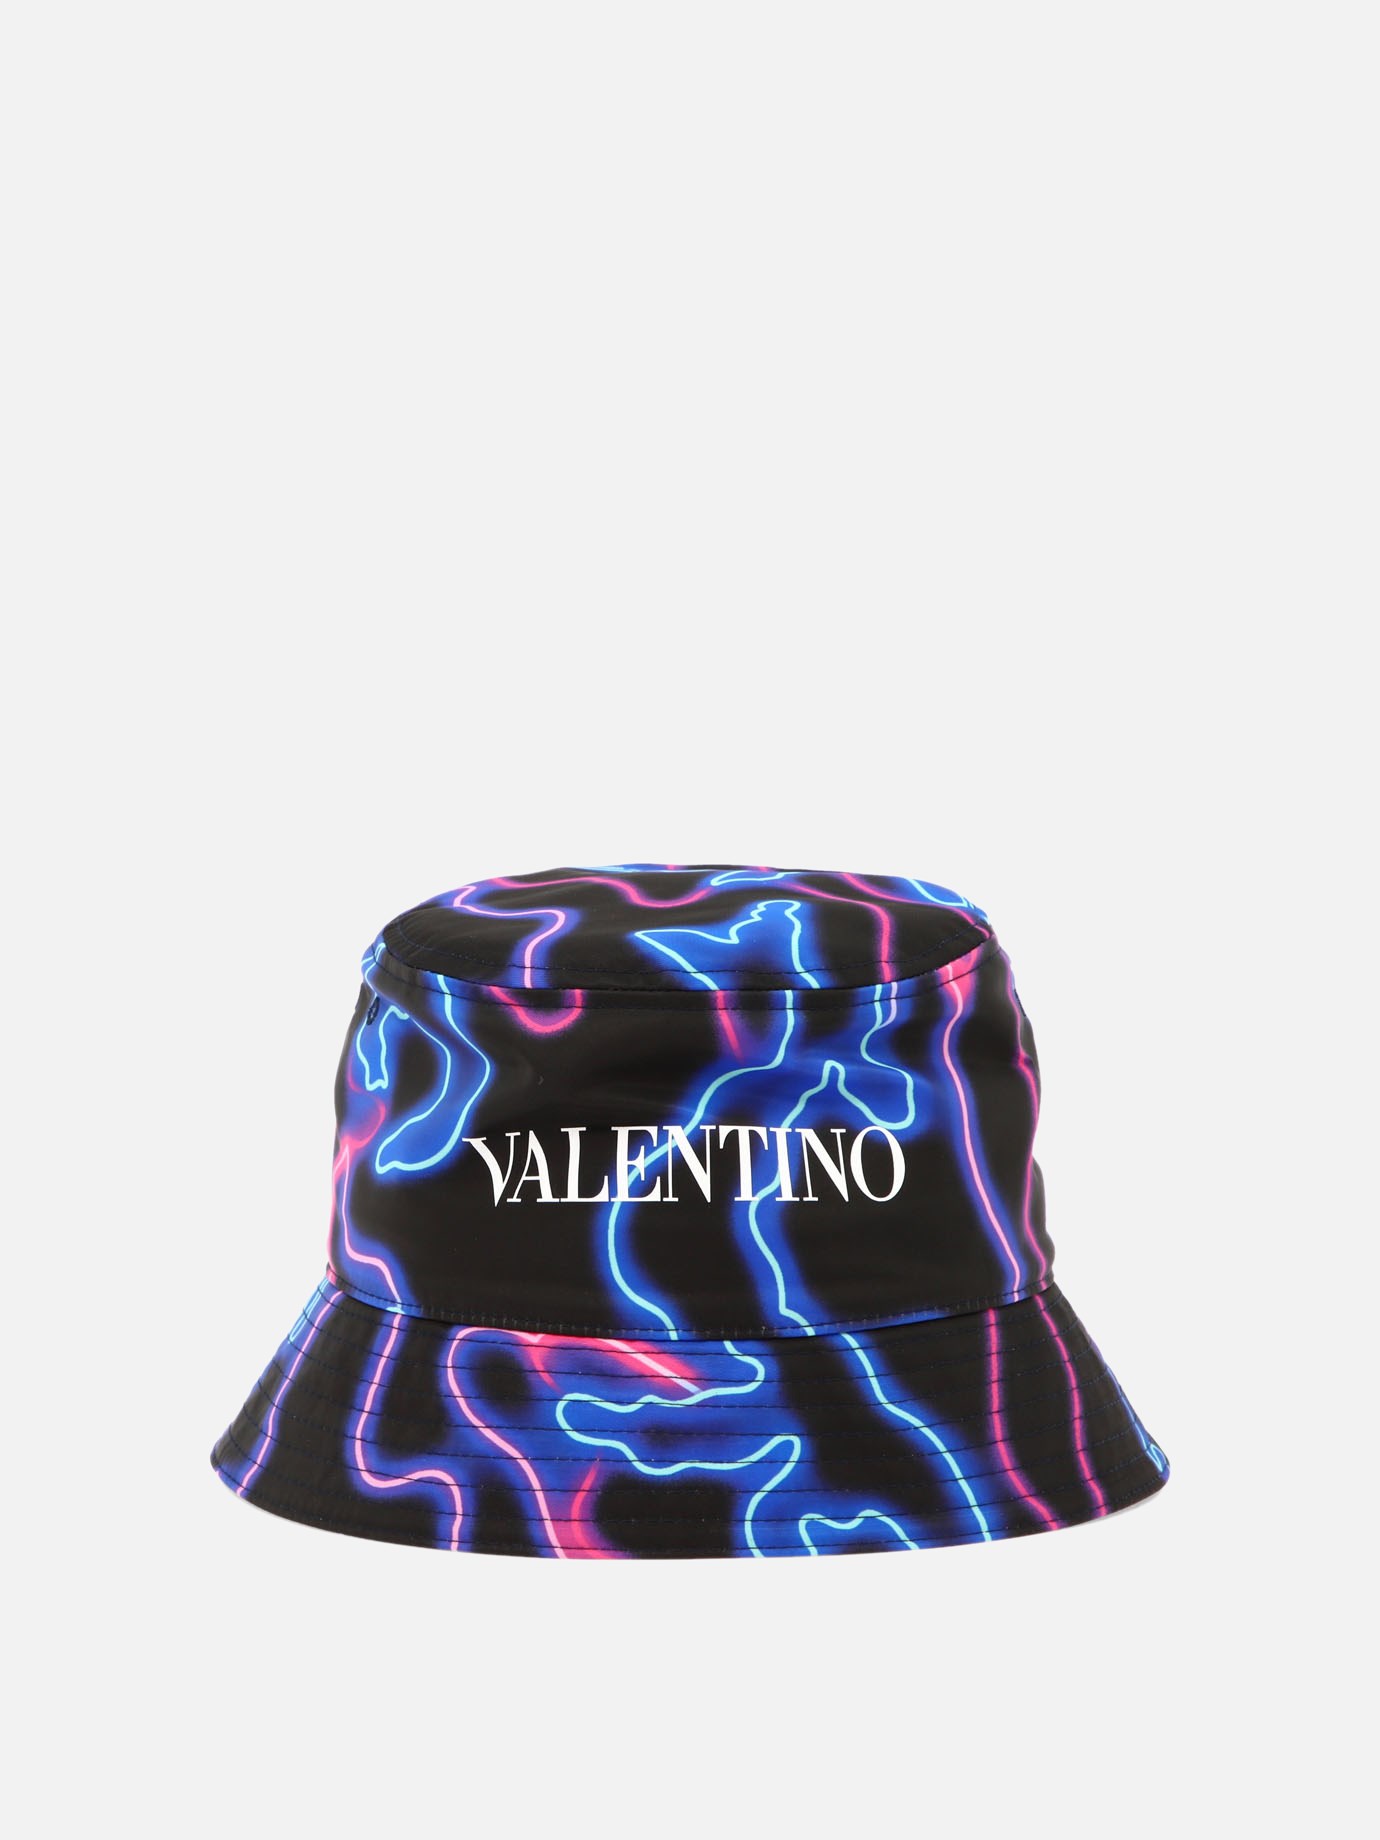  Neon Camou  bucket hatby Valentino Garavani - 1